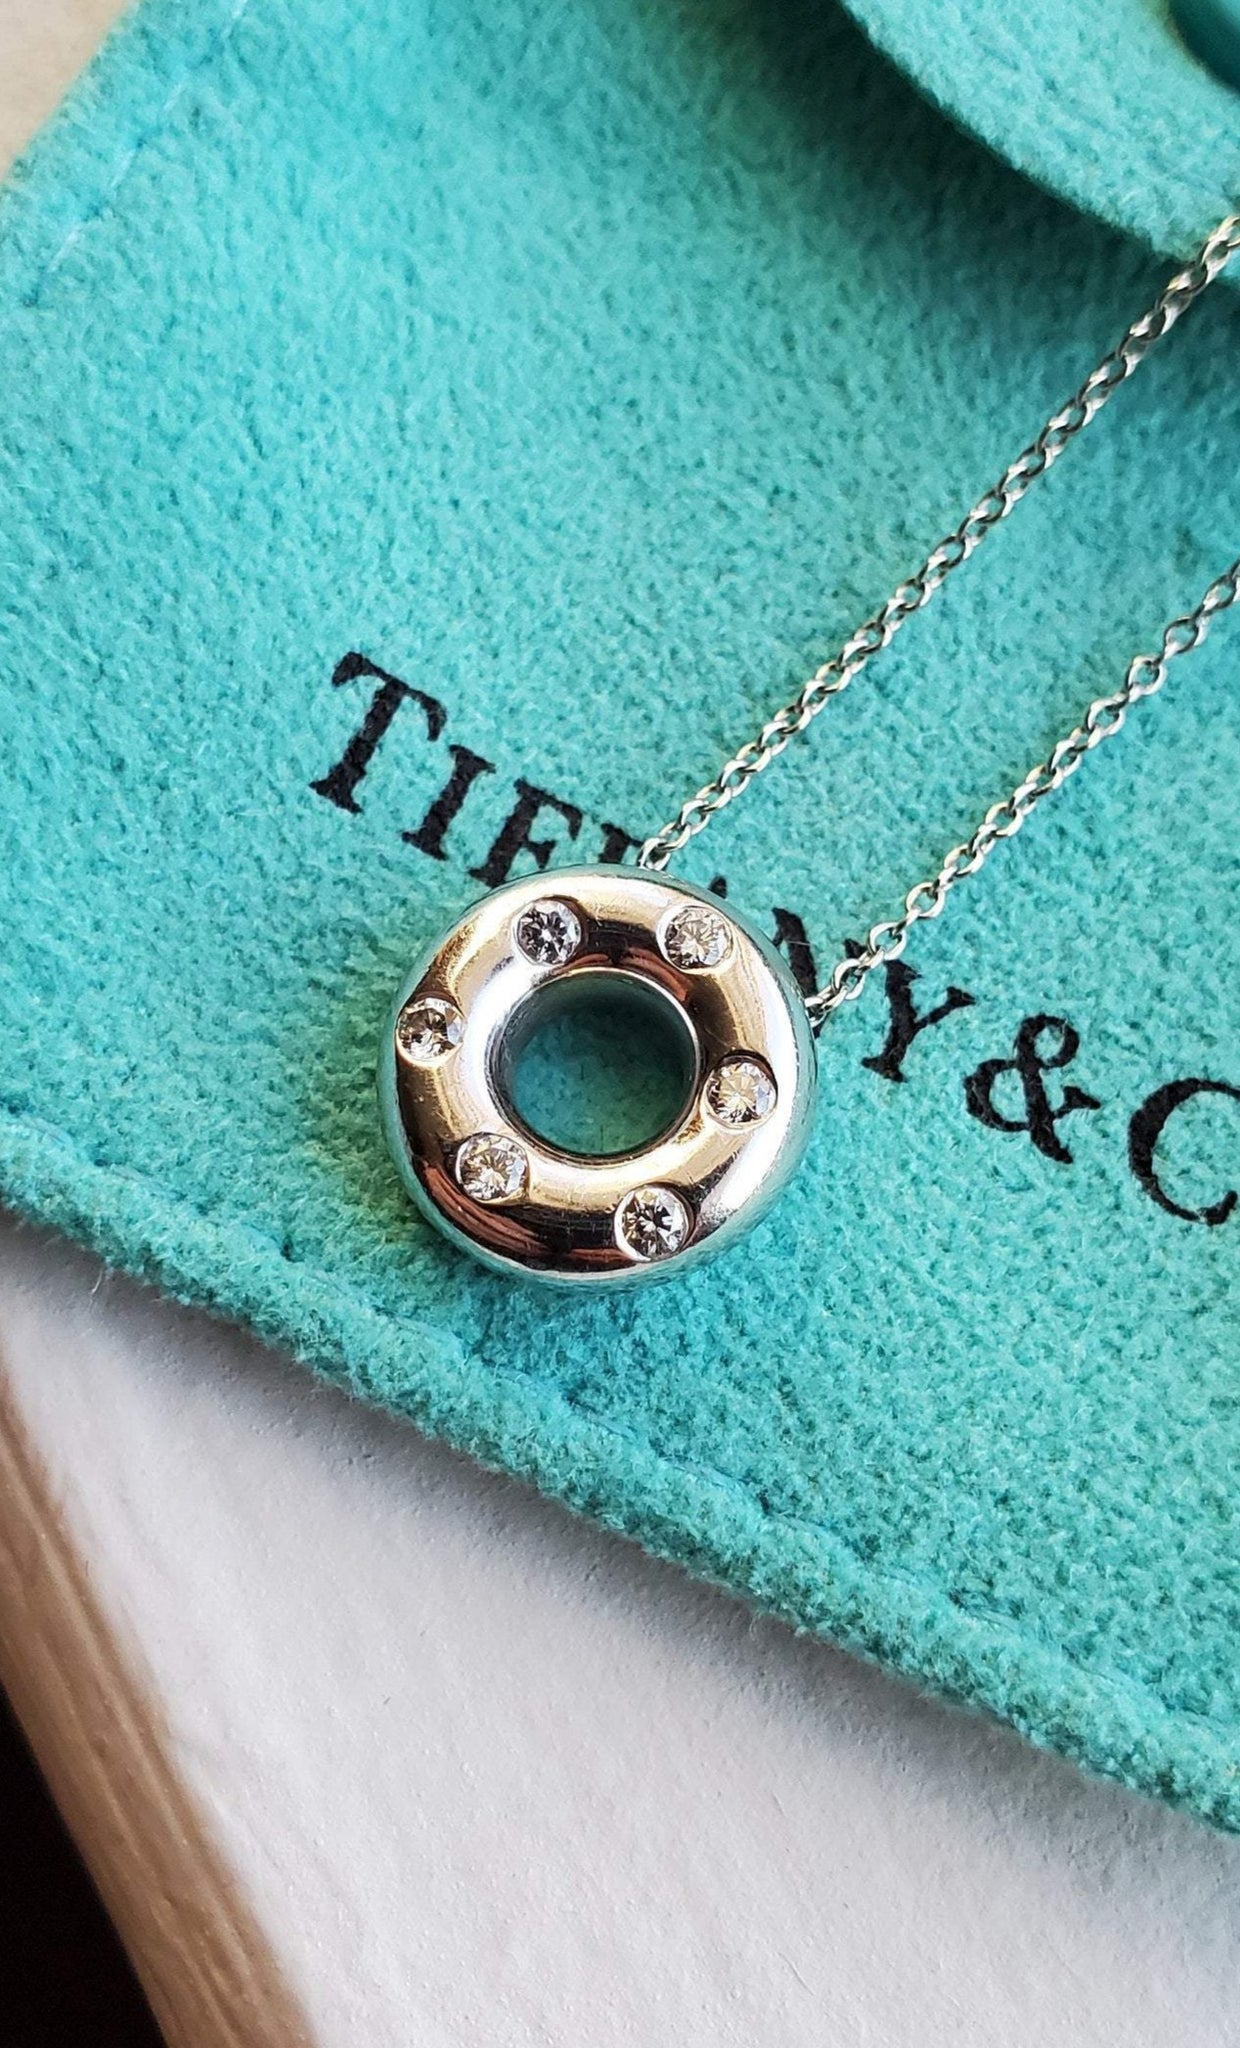 Tiffany & Co. Diamond Station Necklace in Platinum